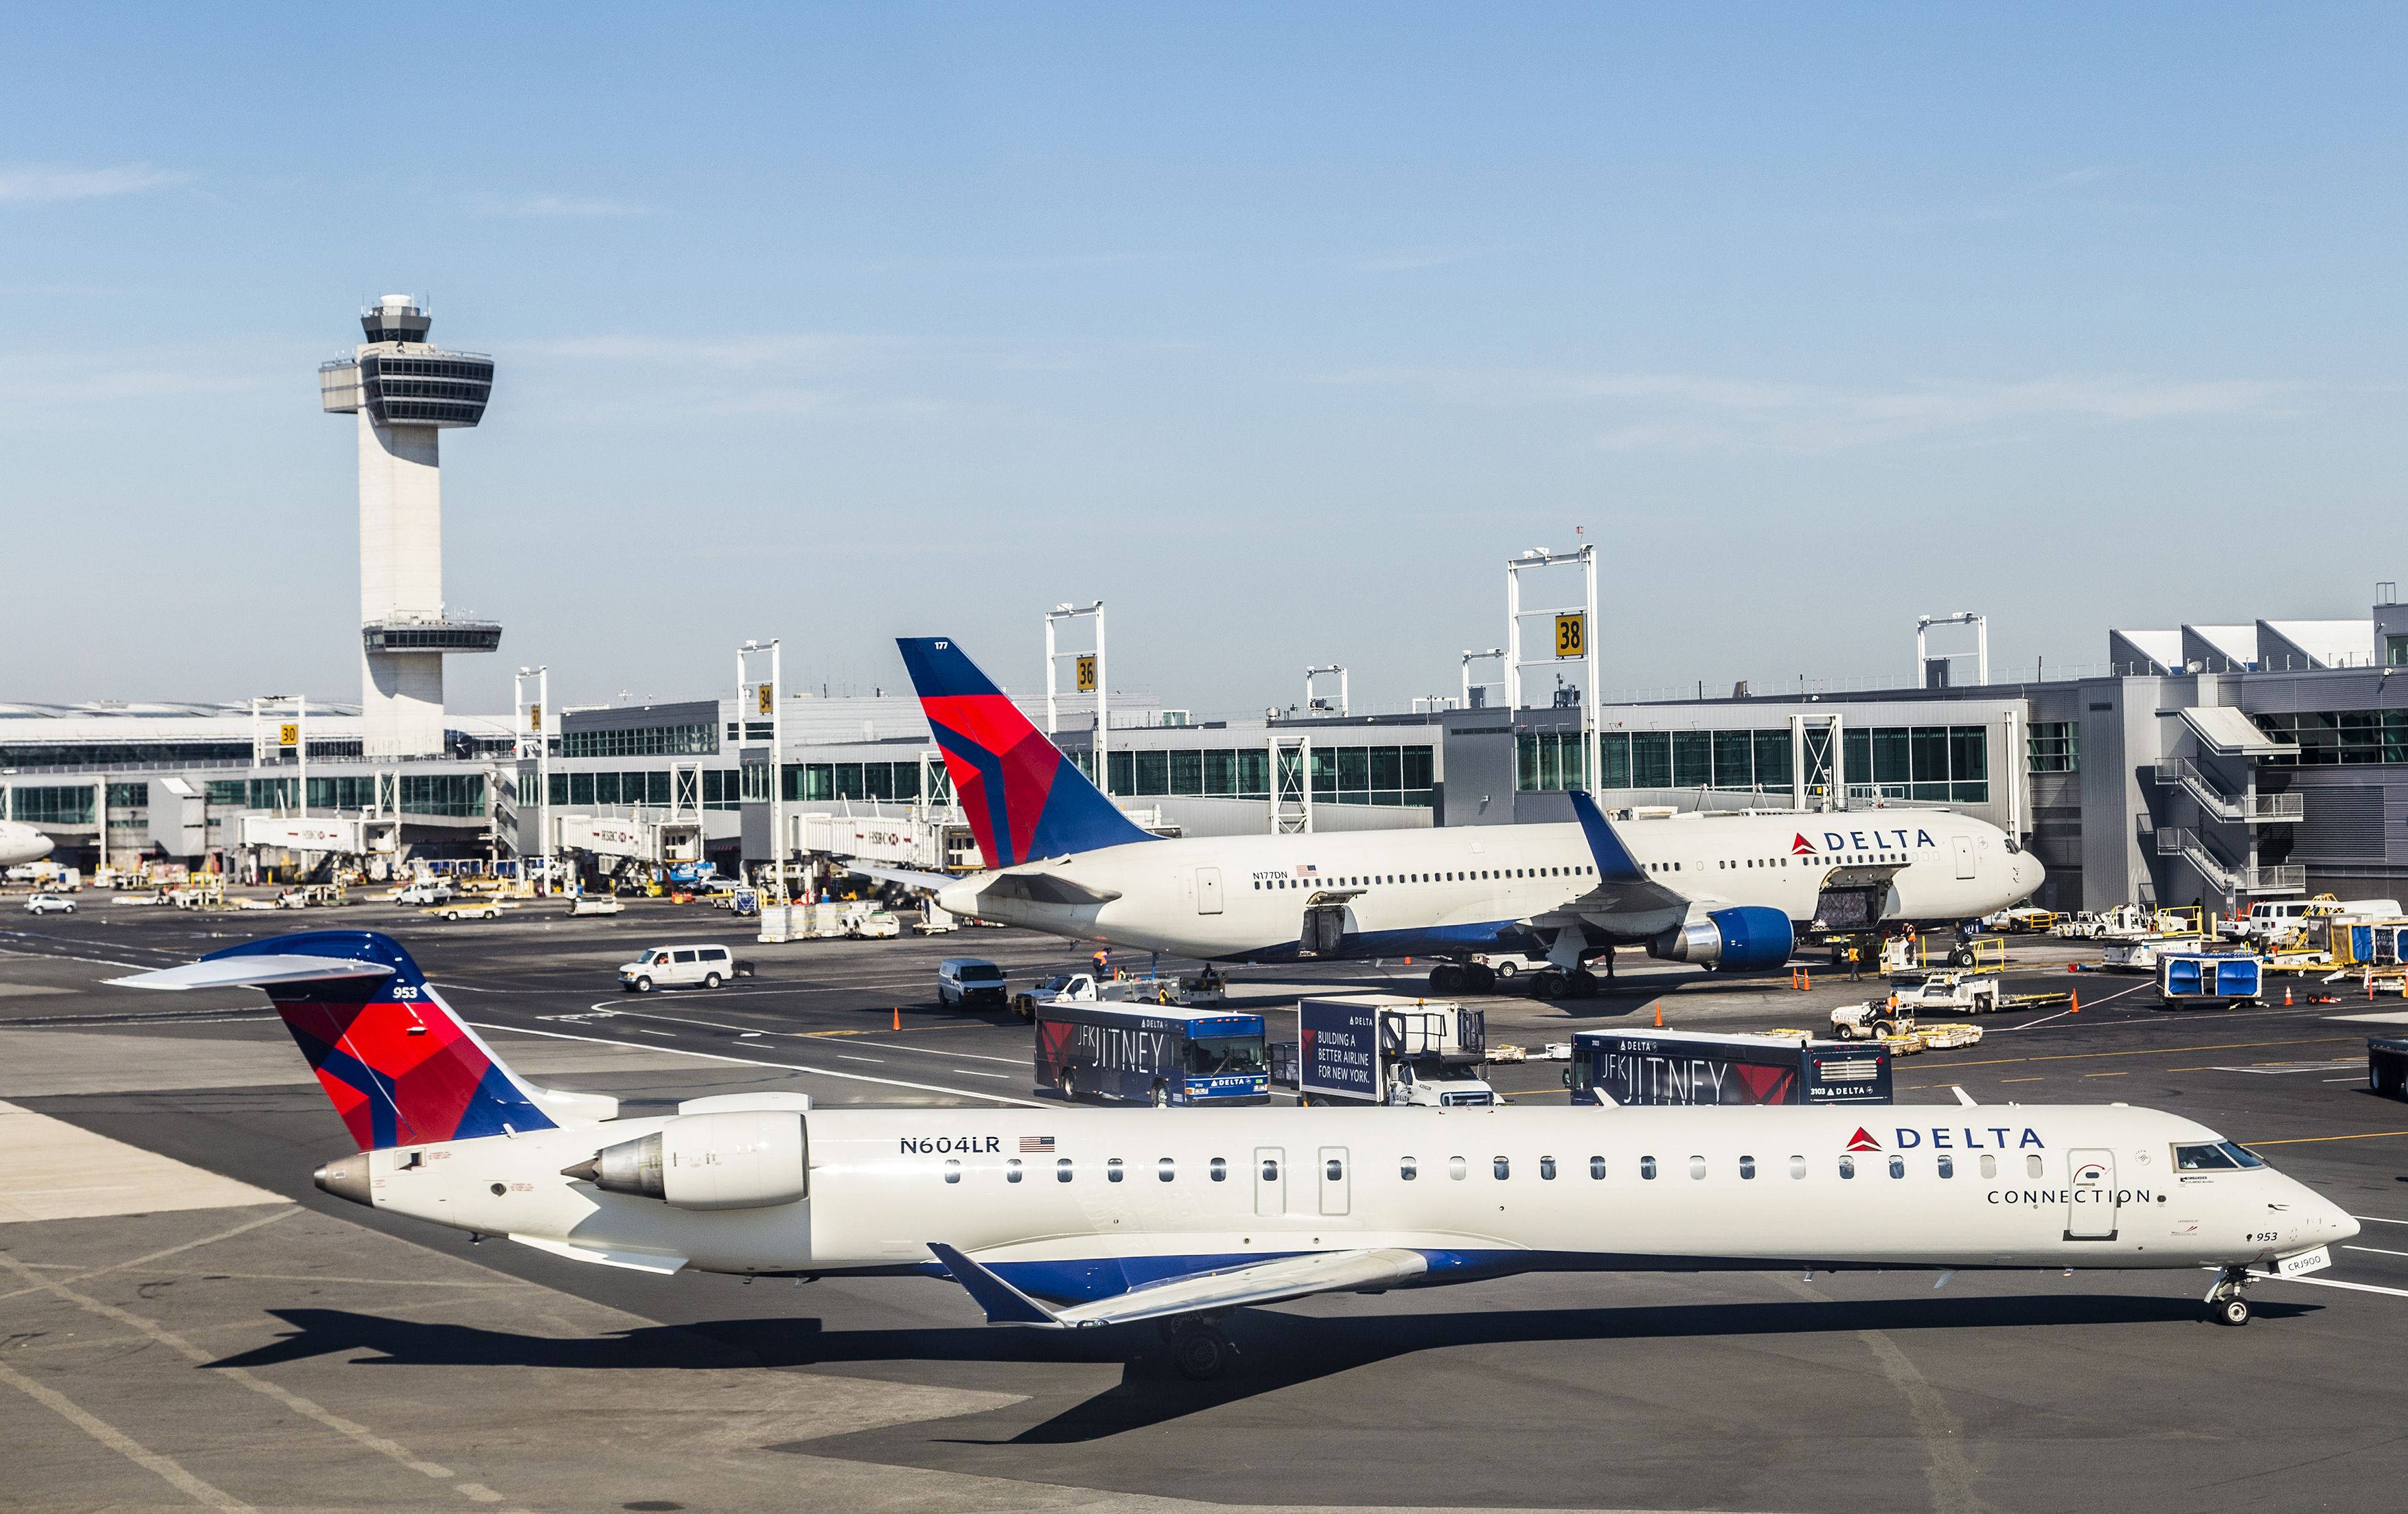 Delta Air Lines Airplanes at JFK Airport